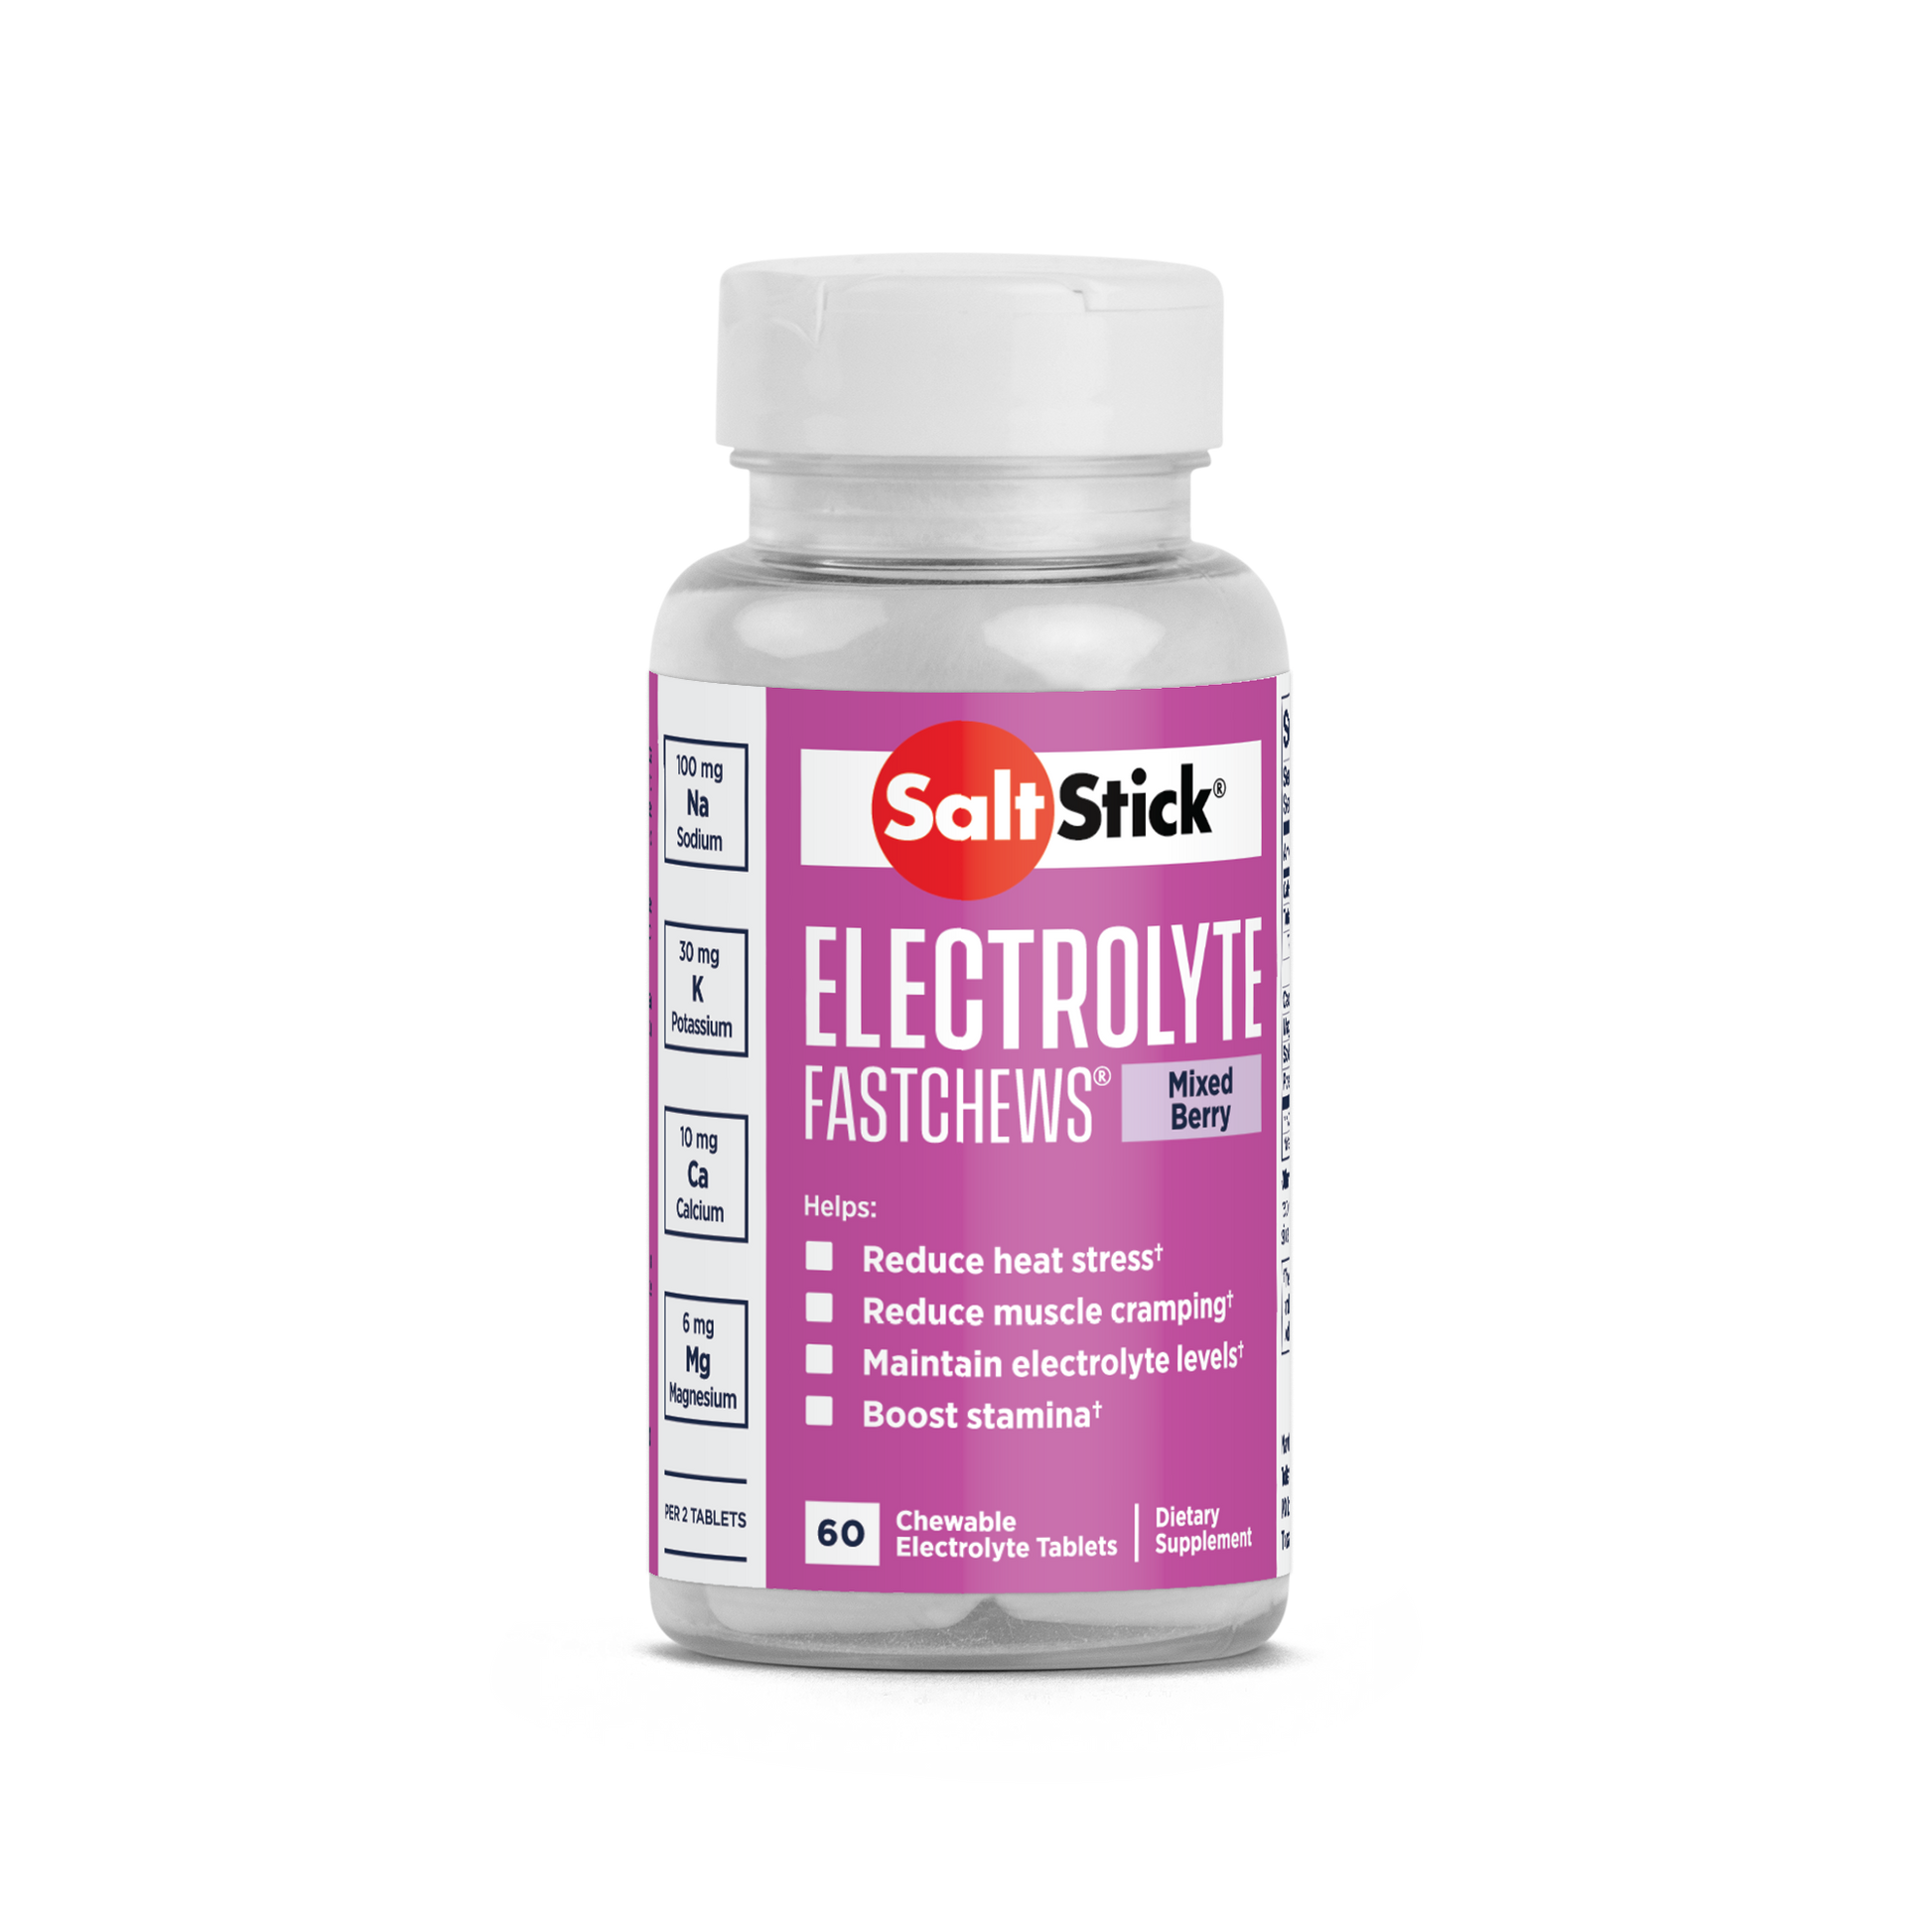 SaltStick FastChews Chewable Electrolyte Tablets Mixed Berry Bottle of 60